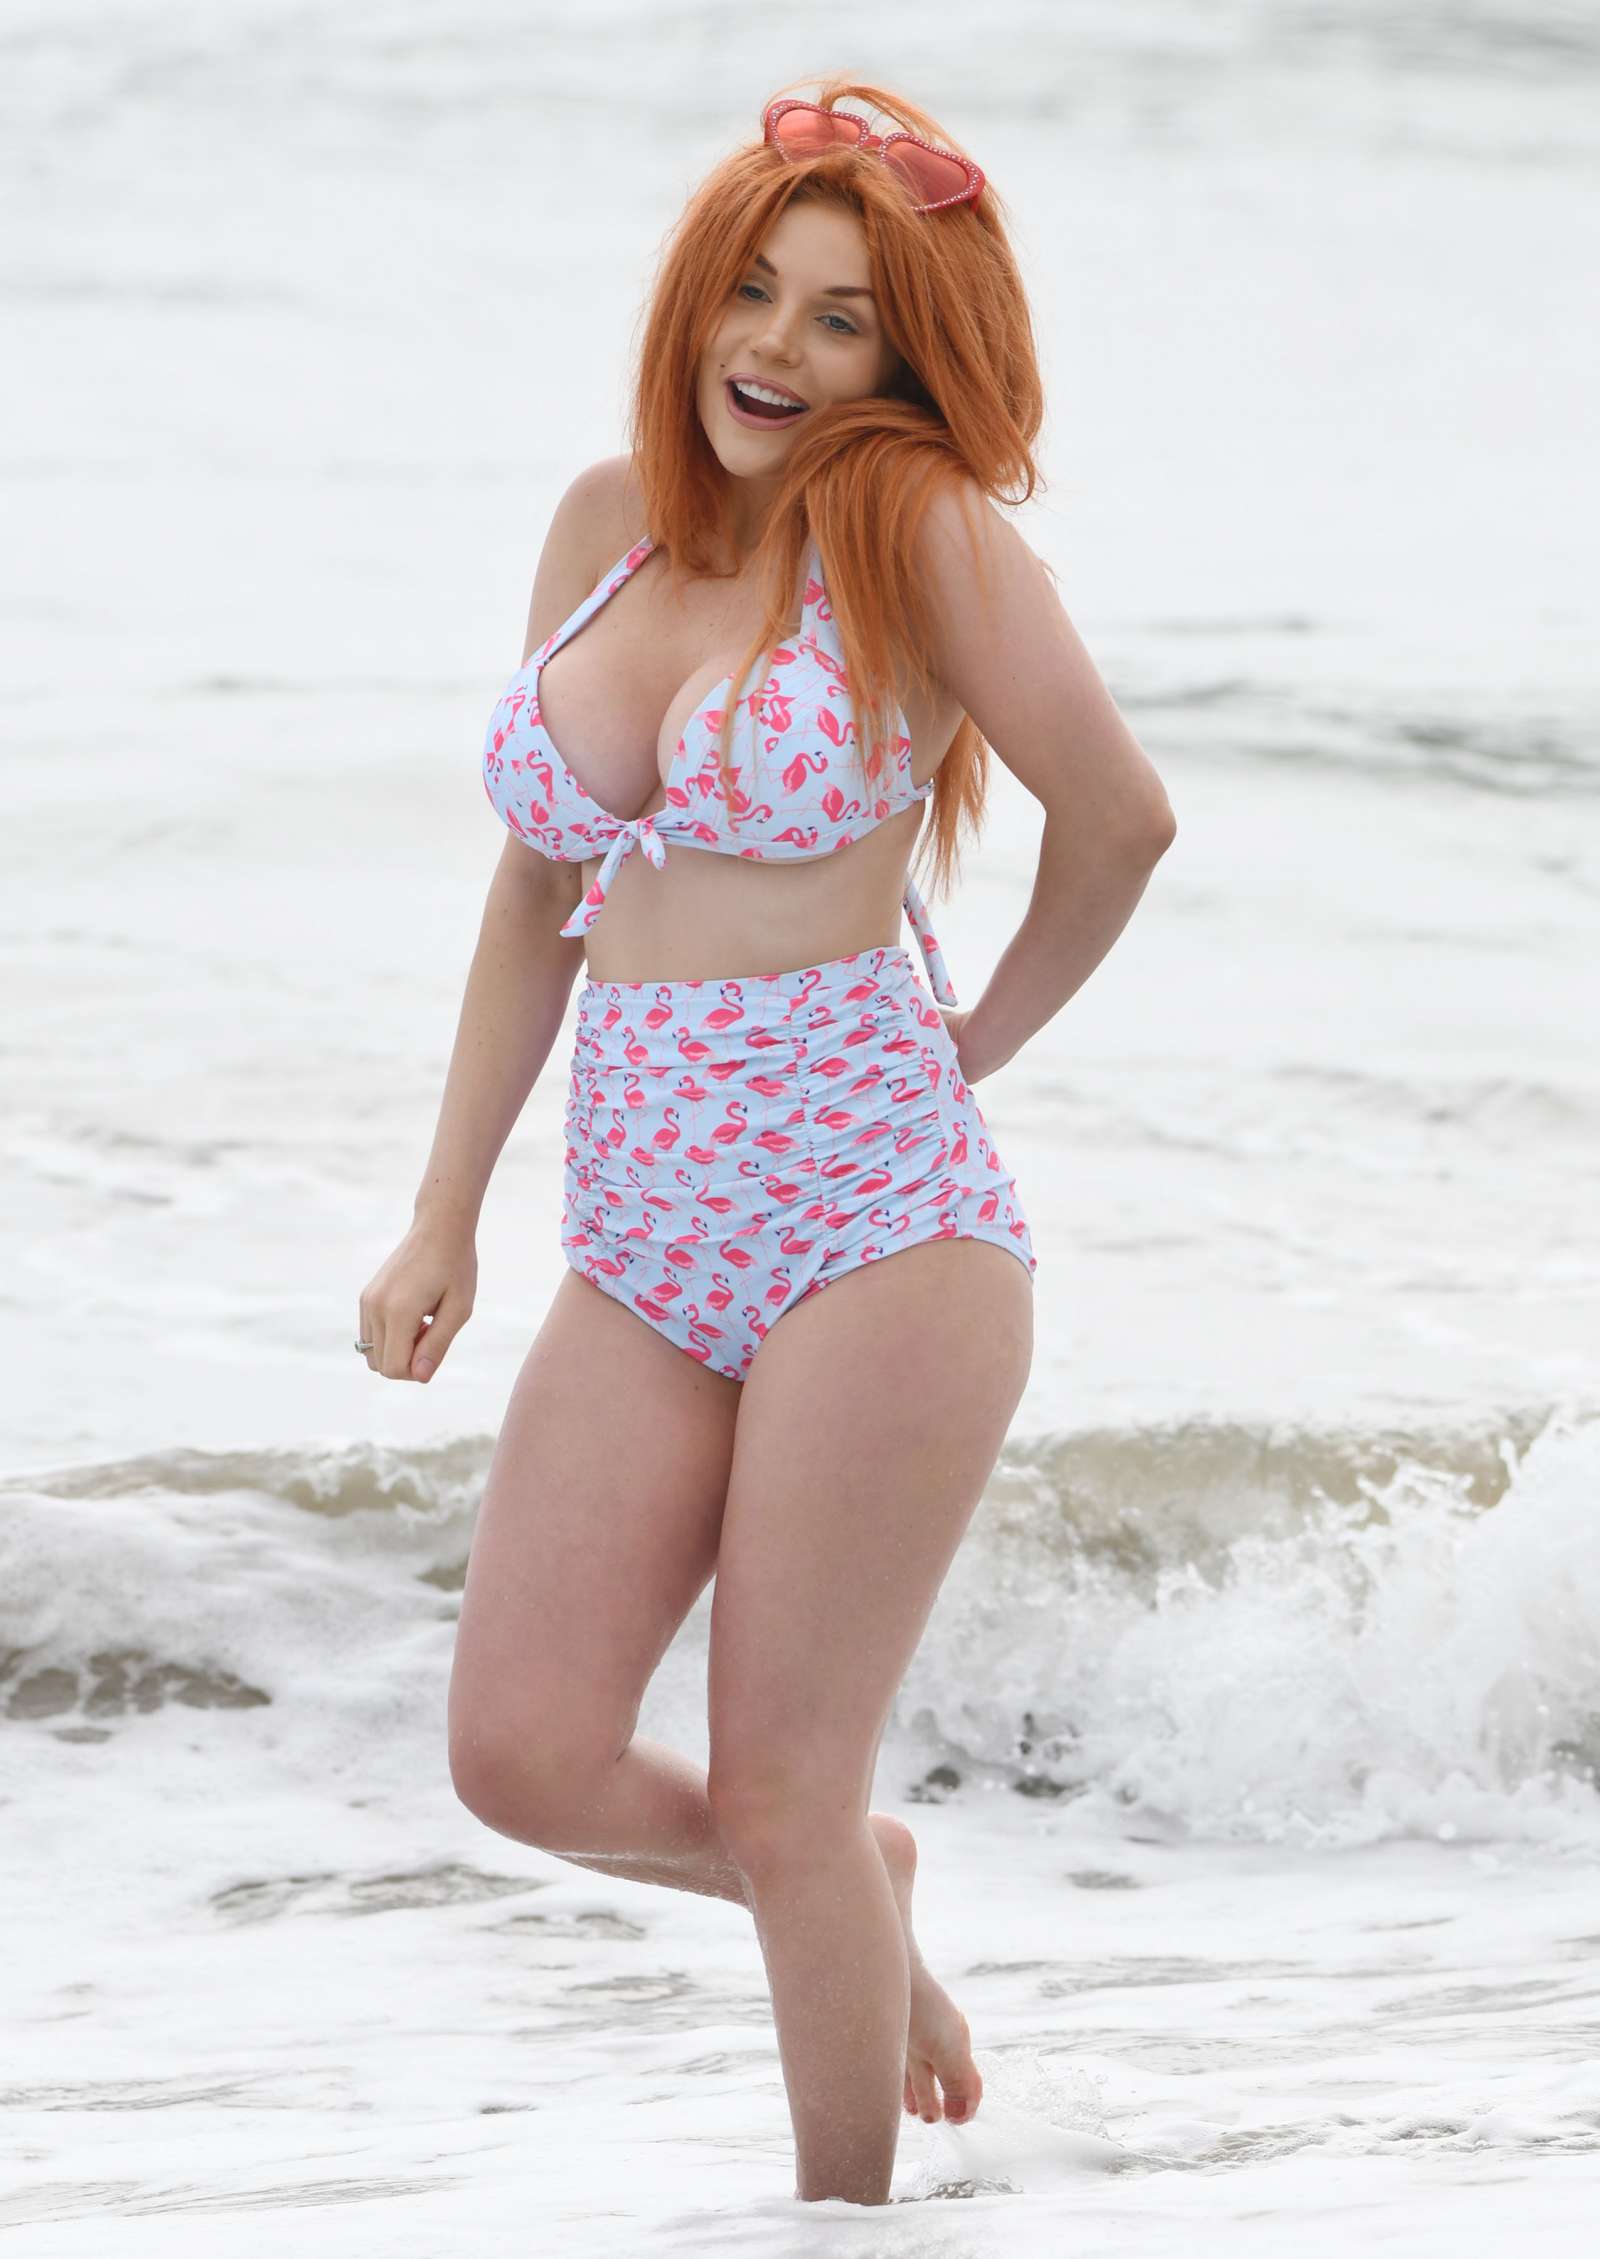 Courtney Stodden in Pink Flamingo Bikini on the beach in Malibu